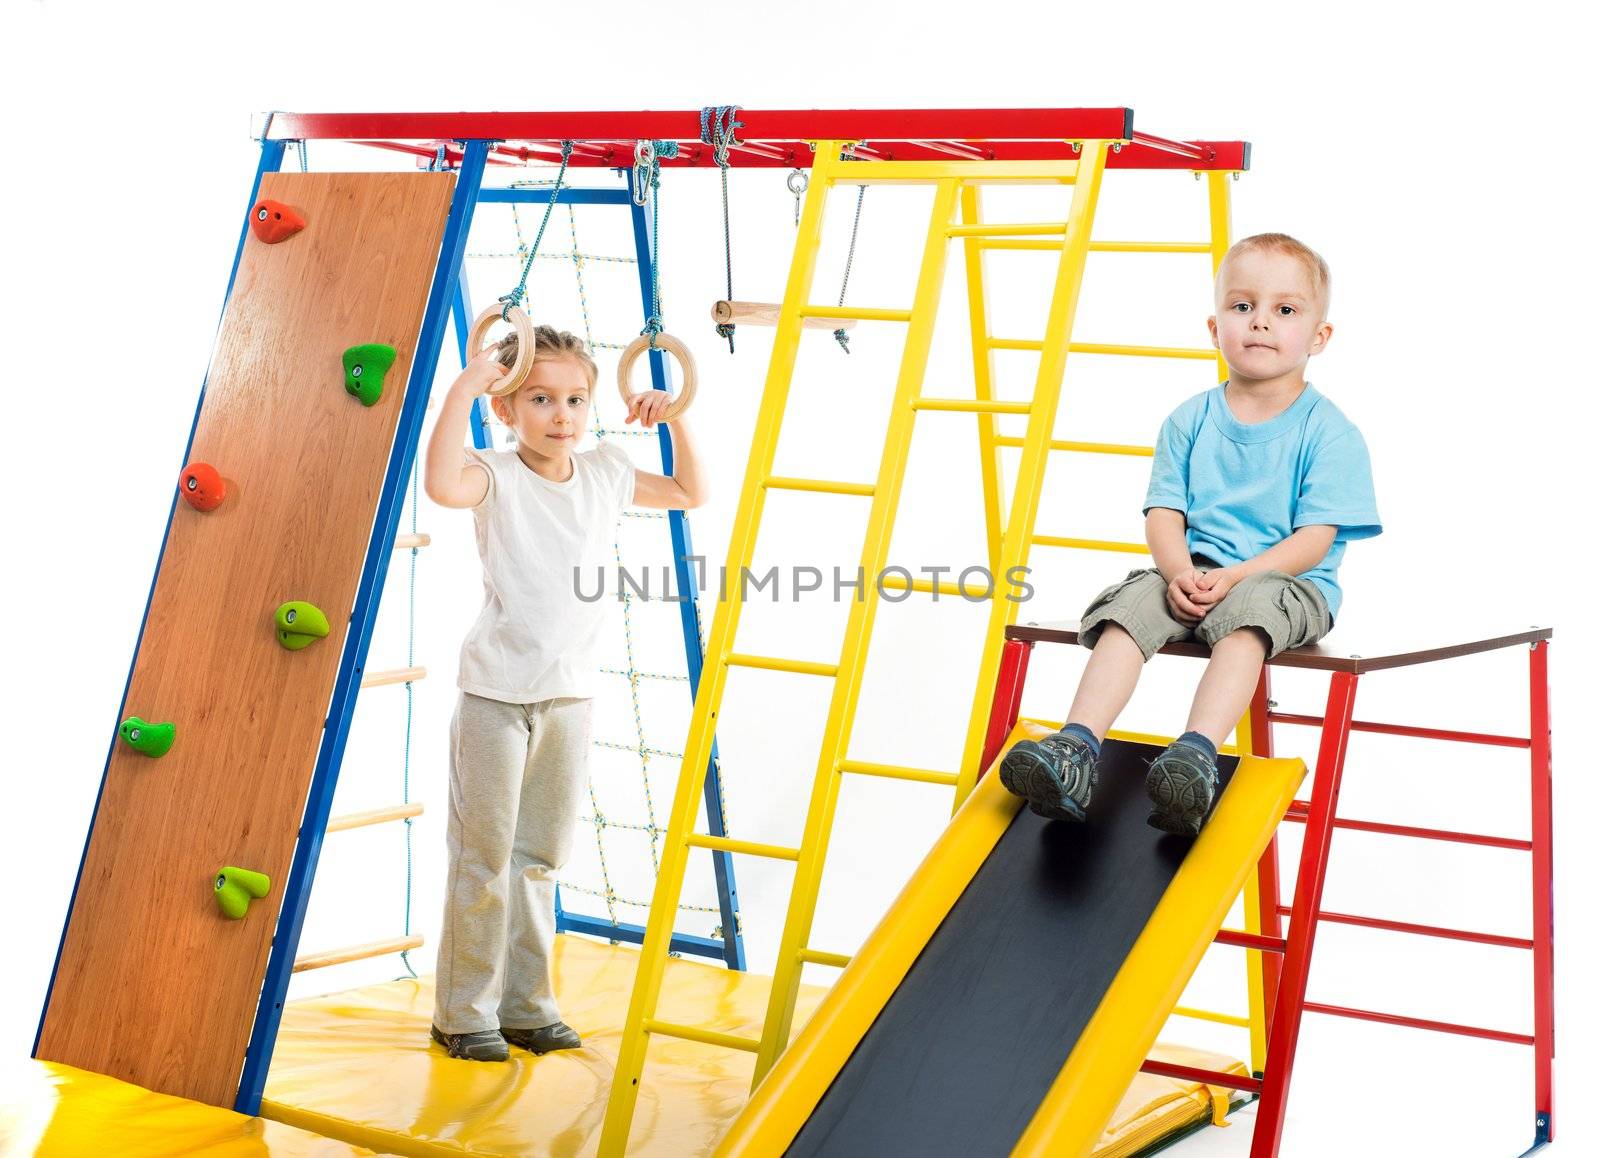 kids on a playground by GekaSkr